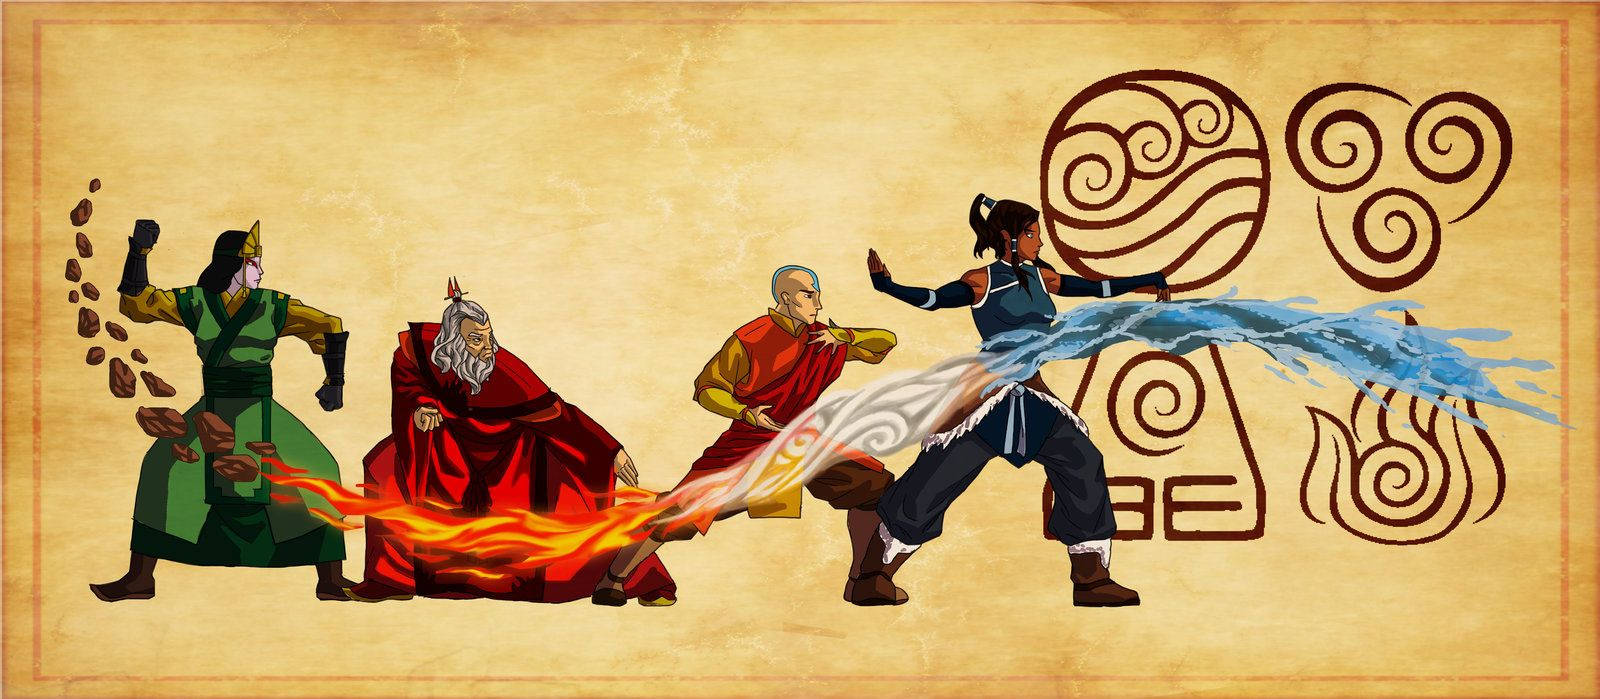 The Four Avatars Wallpaper